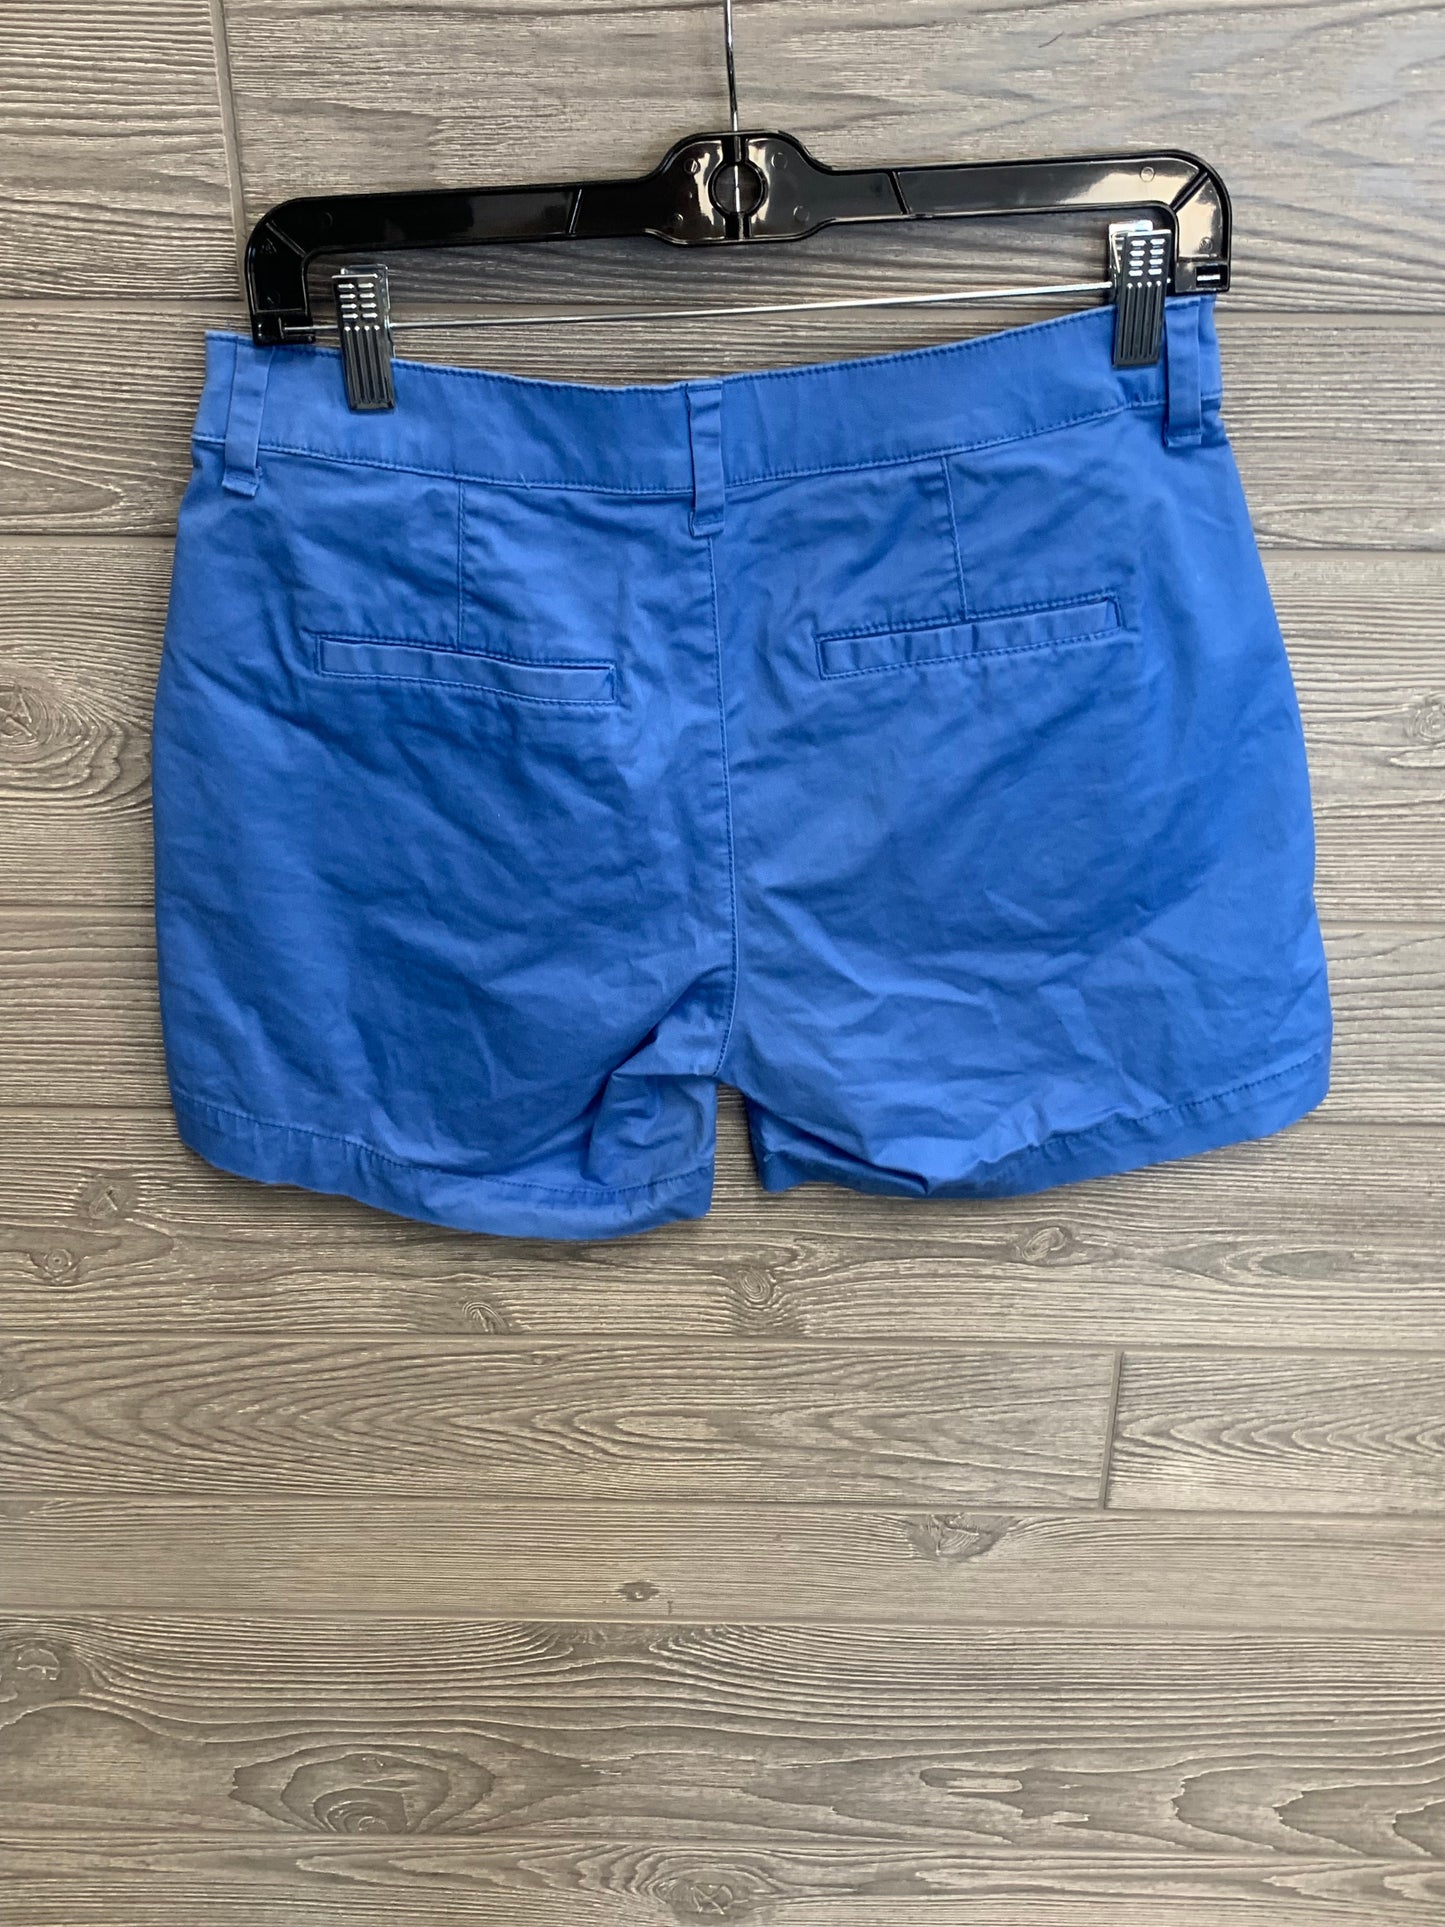 Blue Shorts Gap, Size 2